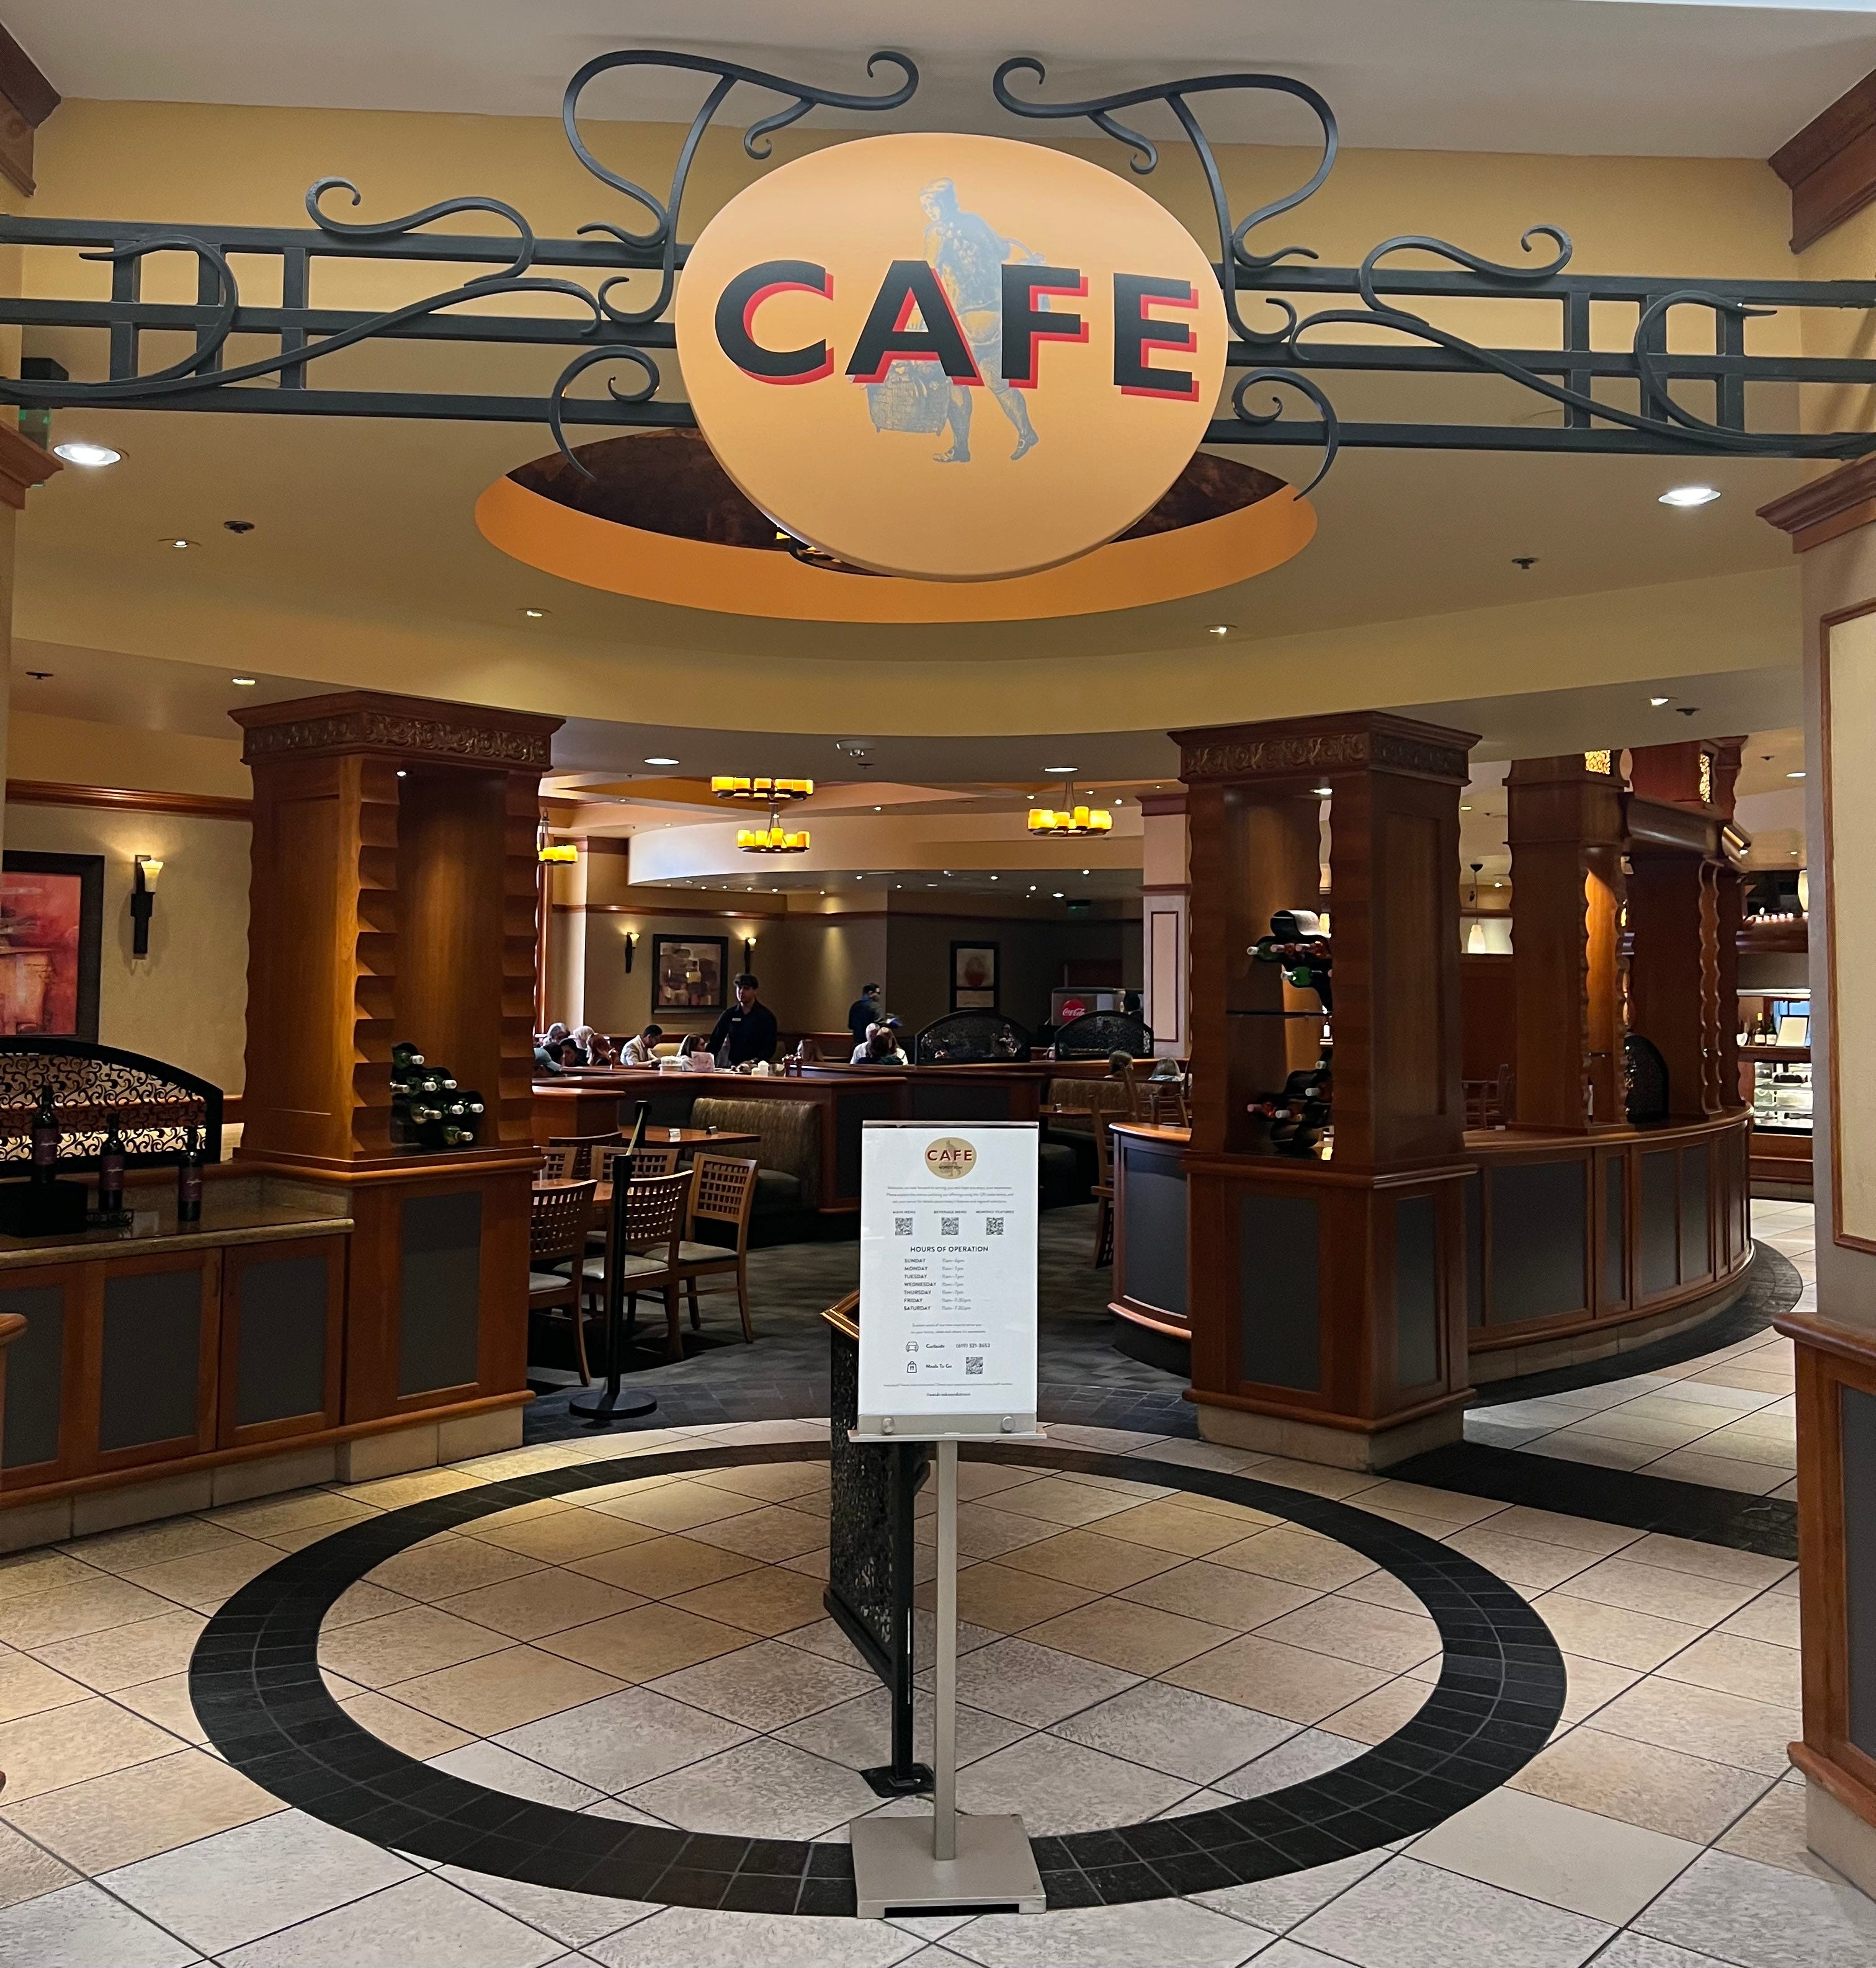 Nordstrom Marketplace Cafe - Las Vegas Weekly